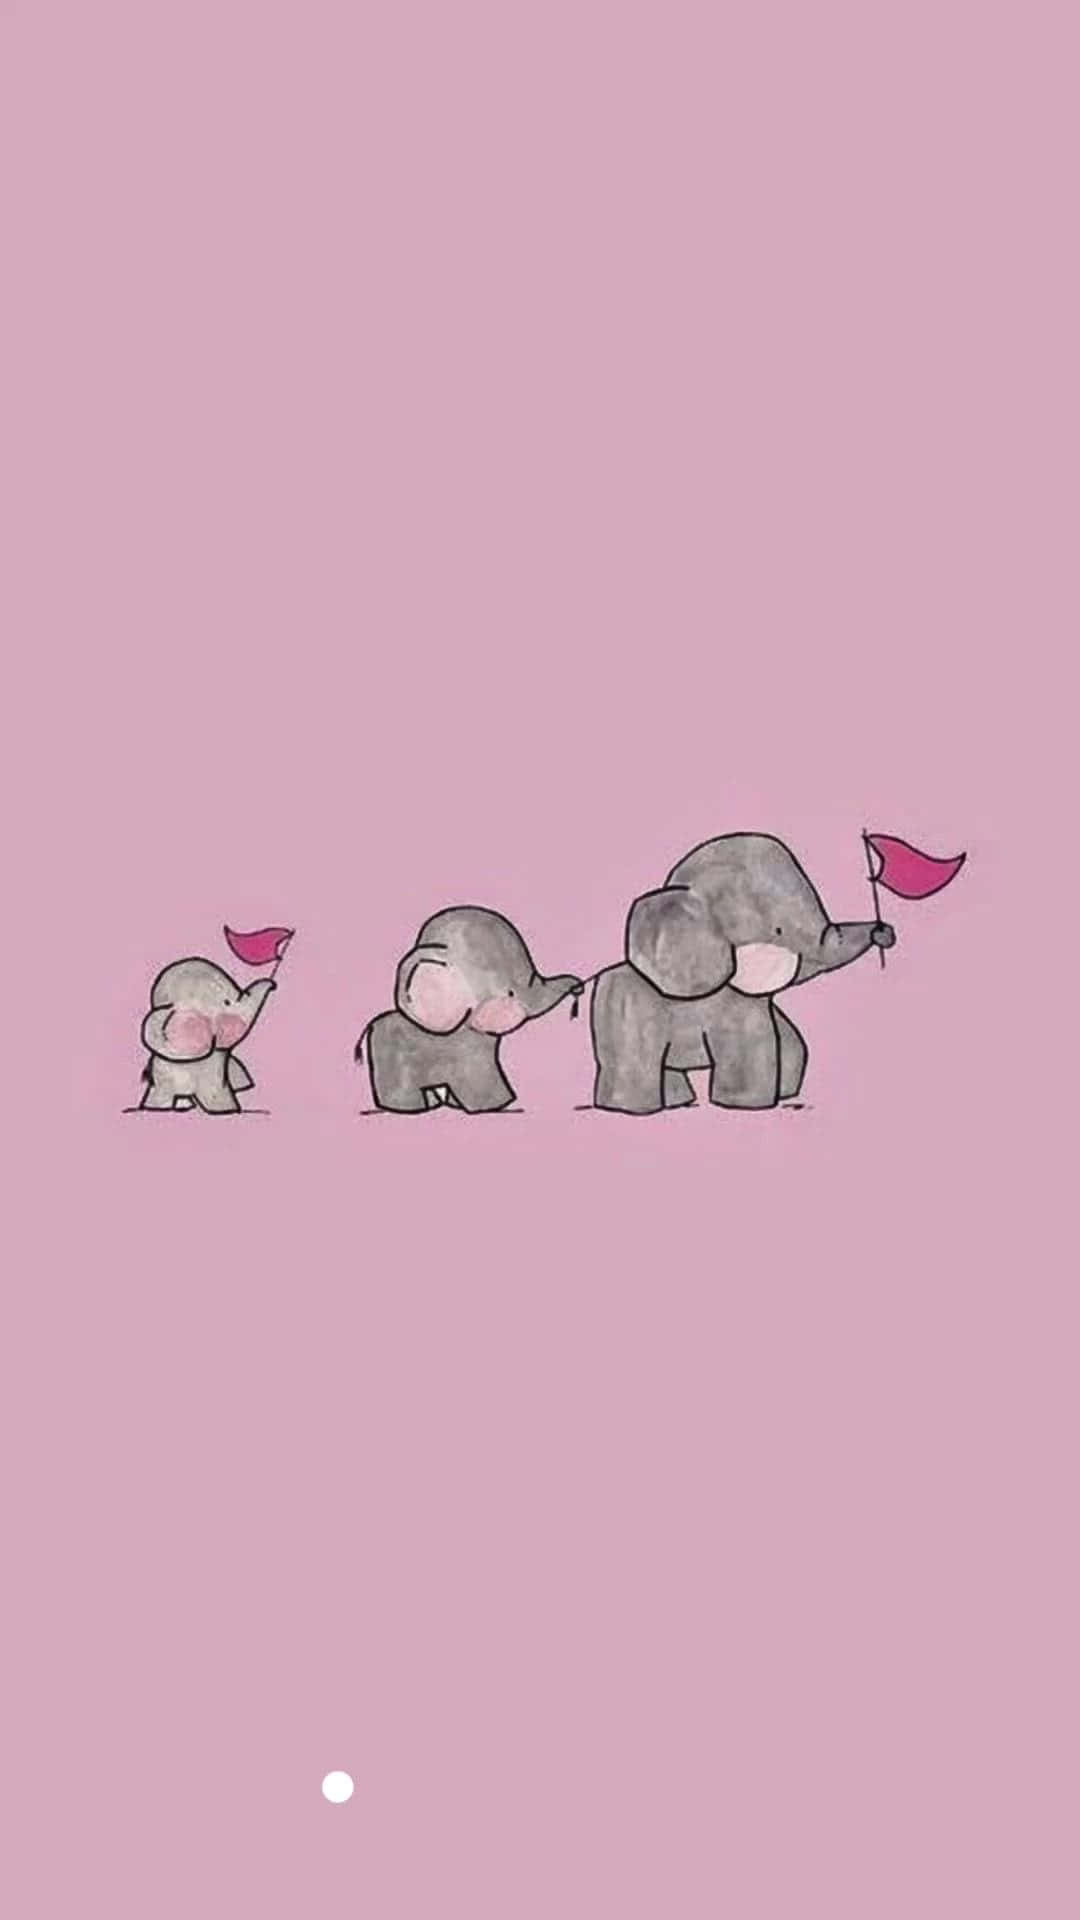 Caption: Playful Pink Elephant Wallpaper